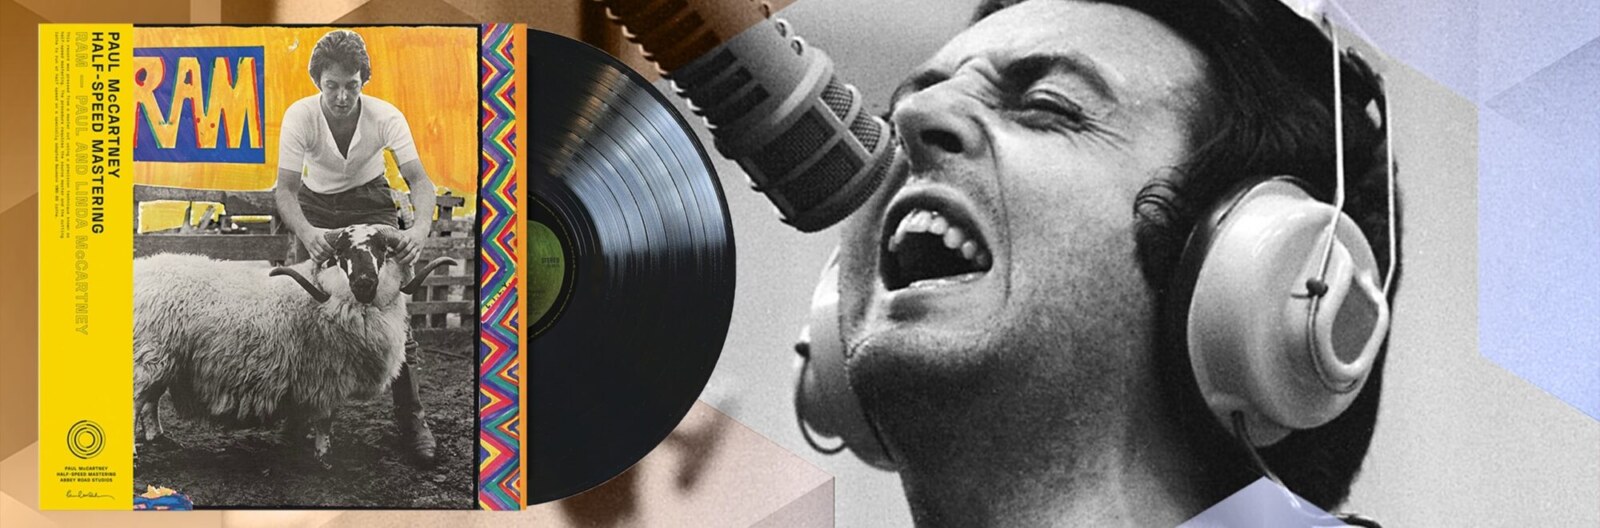 Paul & Linda McCartney - 'Ram' | 50th Anniversary Half-Speed